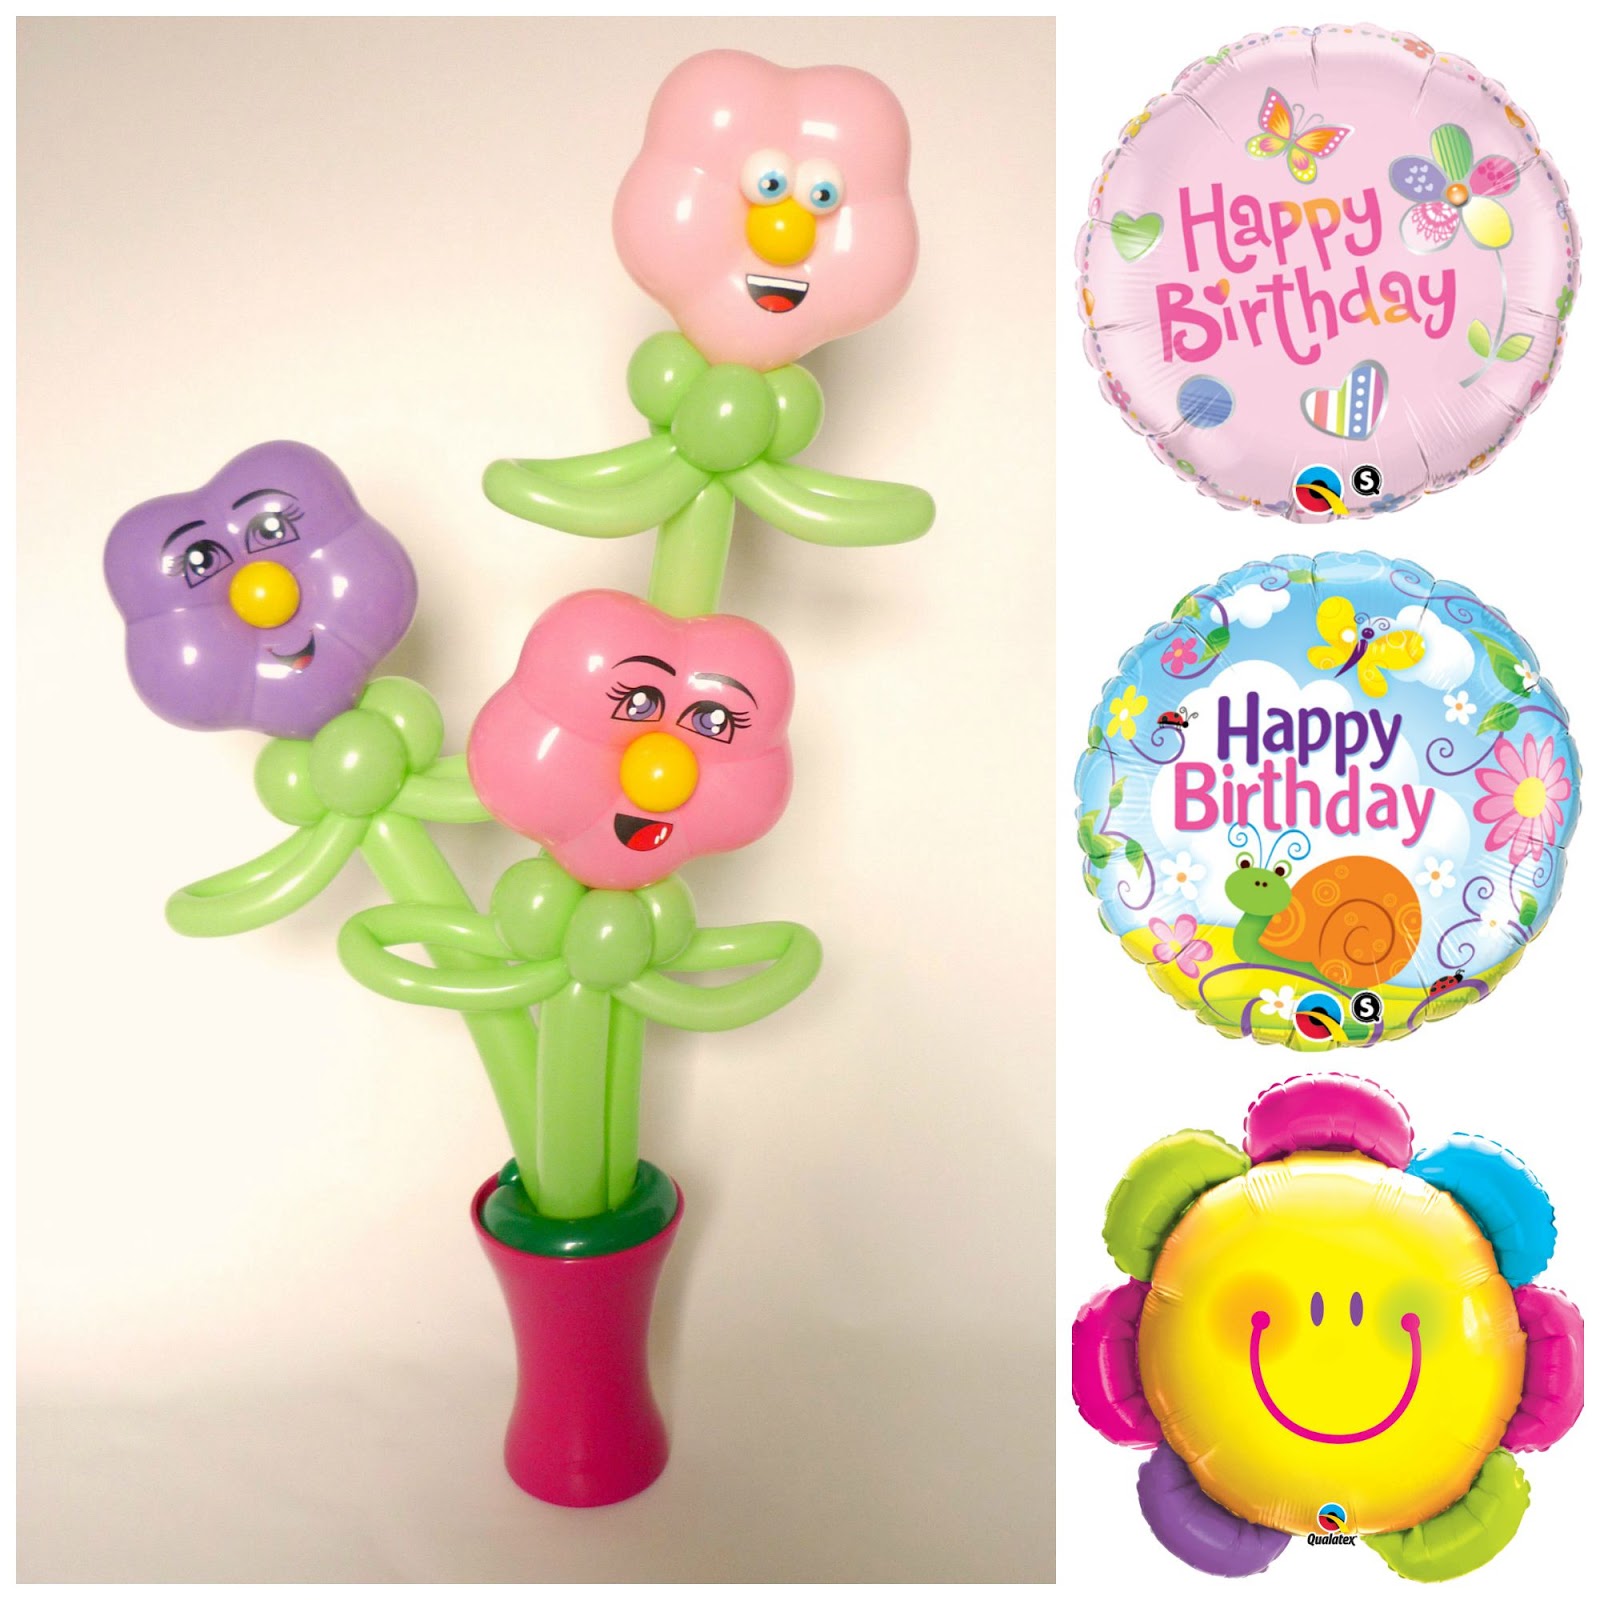 The Very Best Balloon Blog: The GEO® Balloon celebrates 25 years!